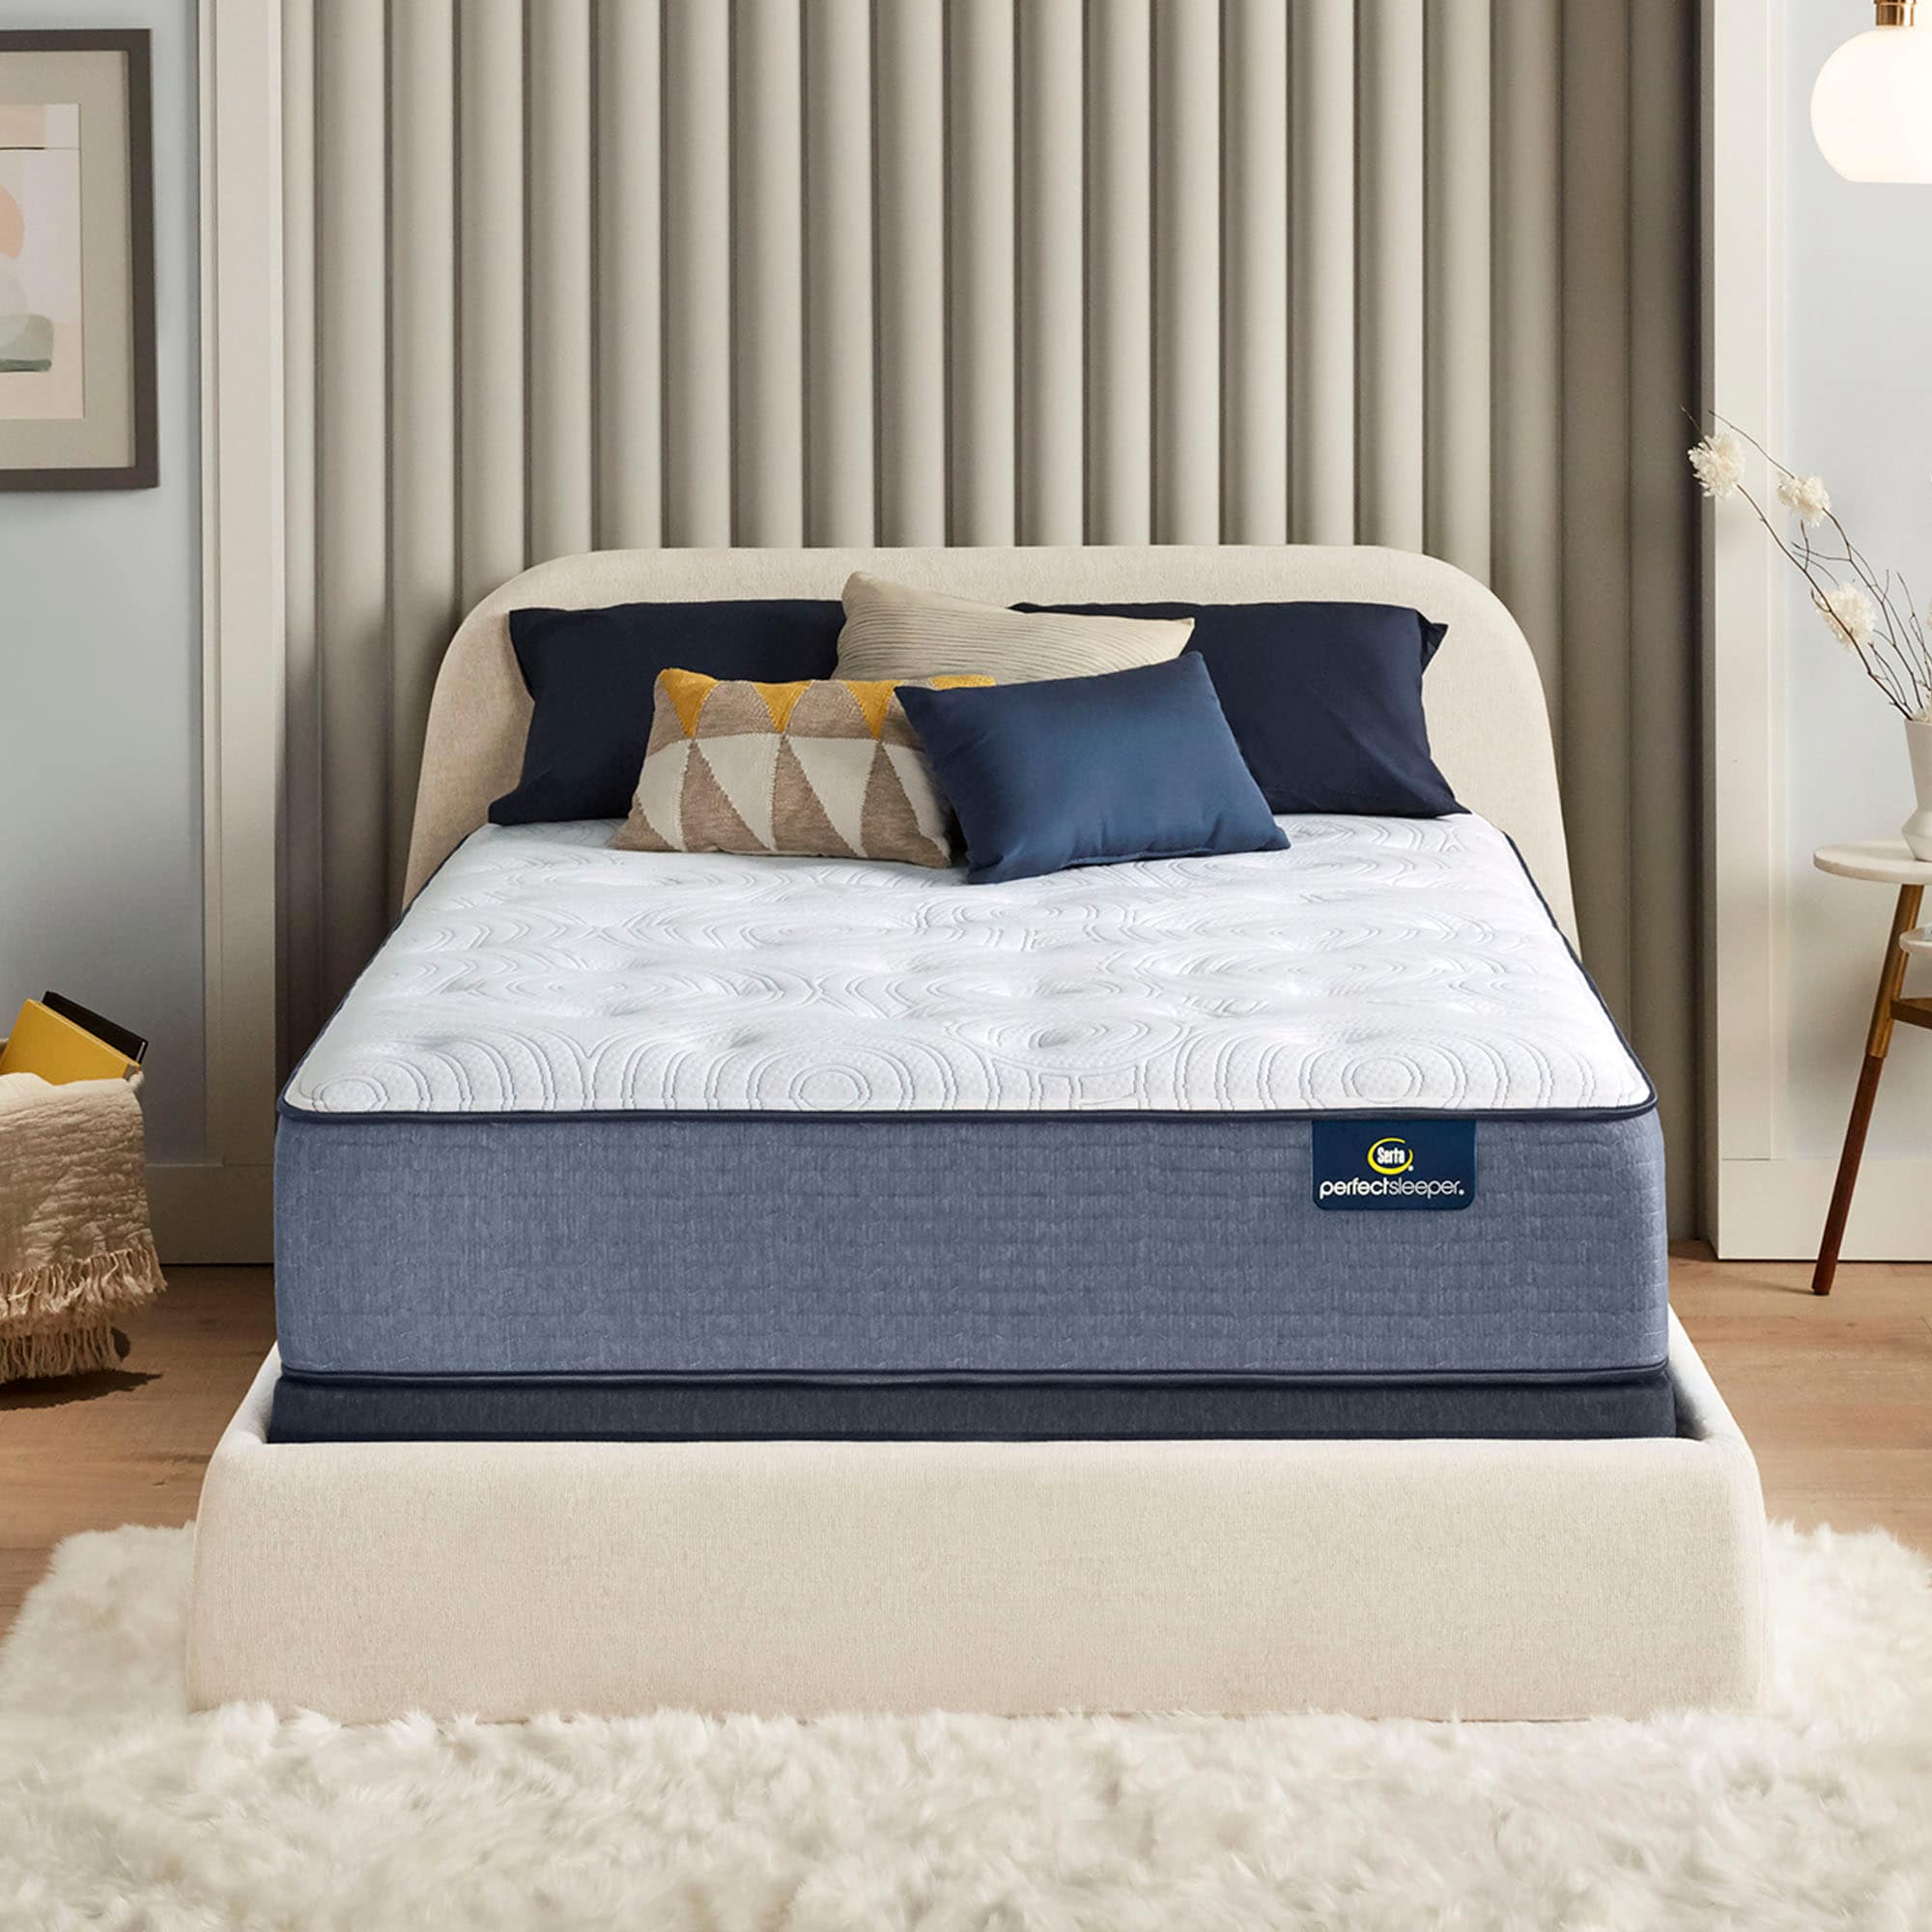 Serta Perfect Sleeper Sapphire, Serta Perfect Sleeper Air Bed With Headboard